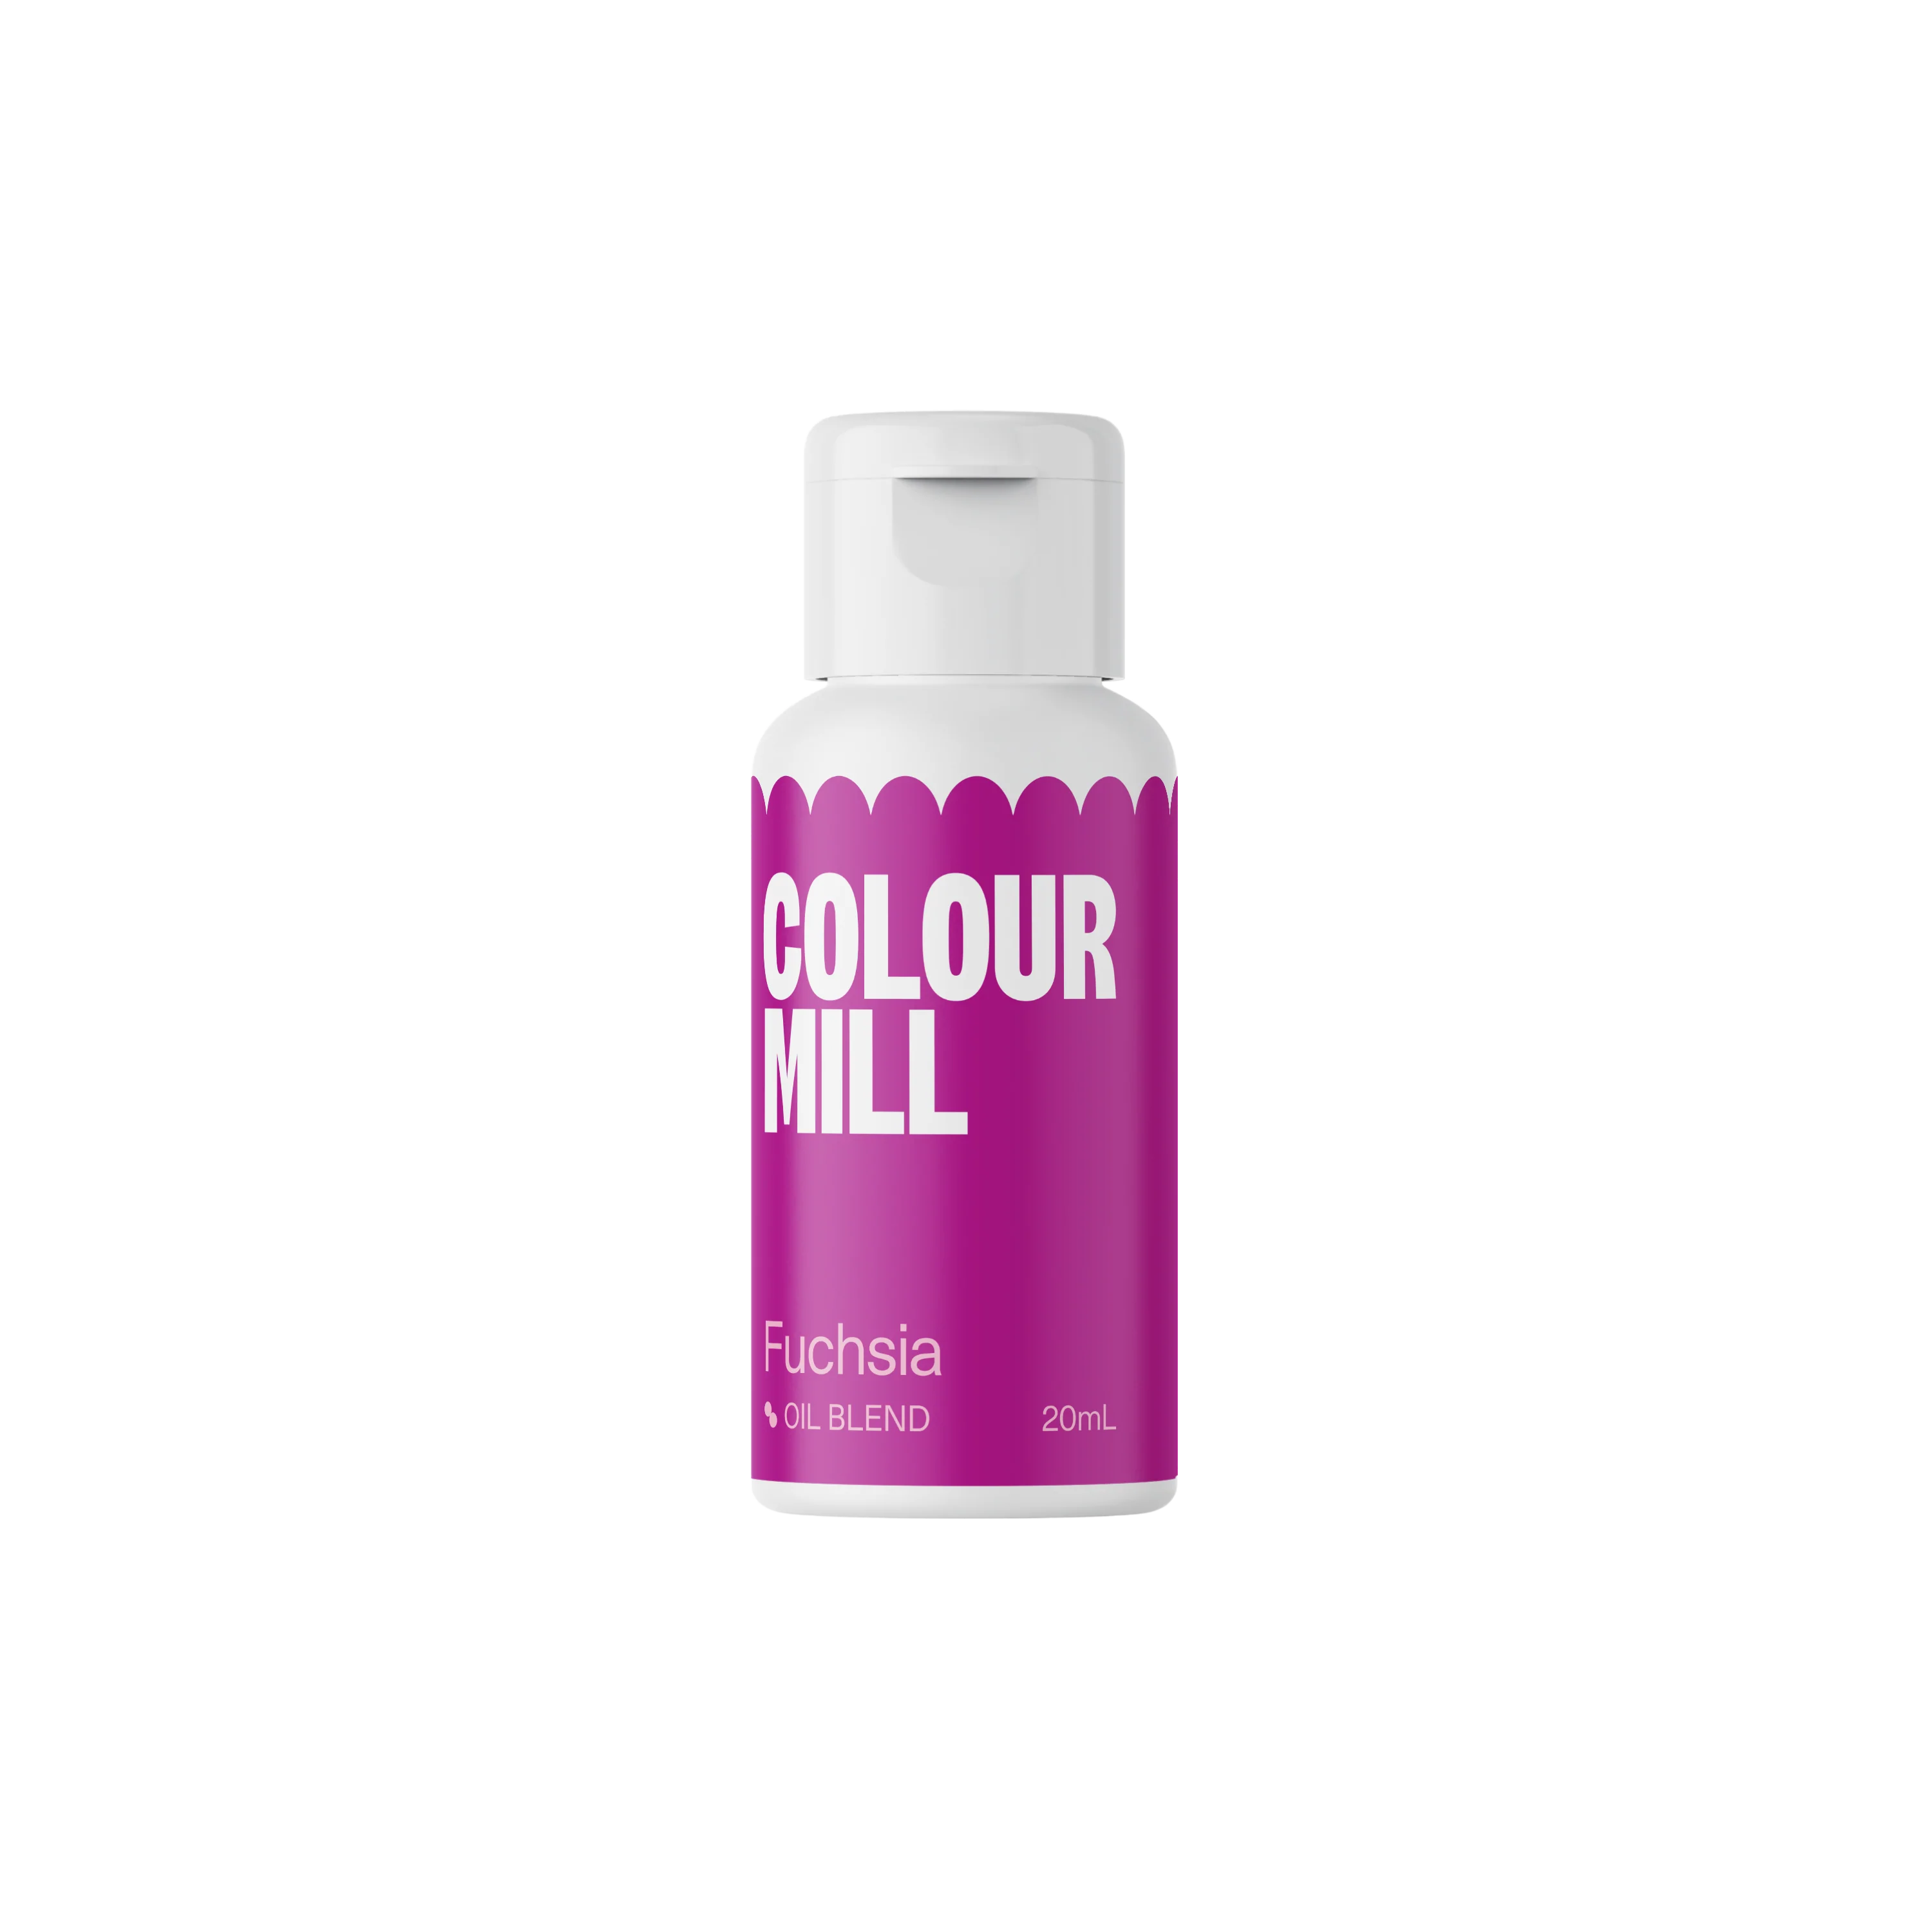 Fuchsia, 20ml, Colour Mill Oil Based Colouring